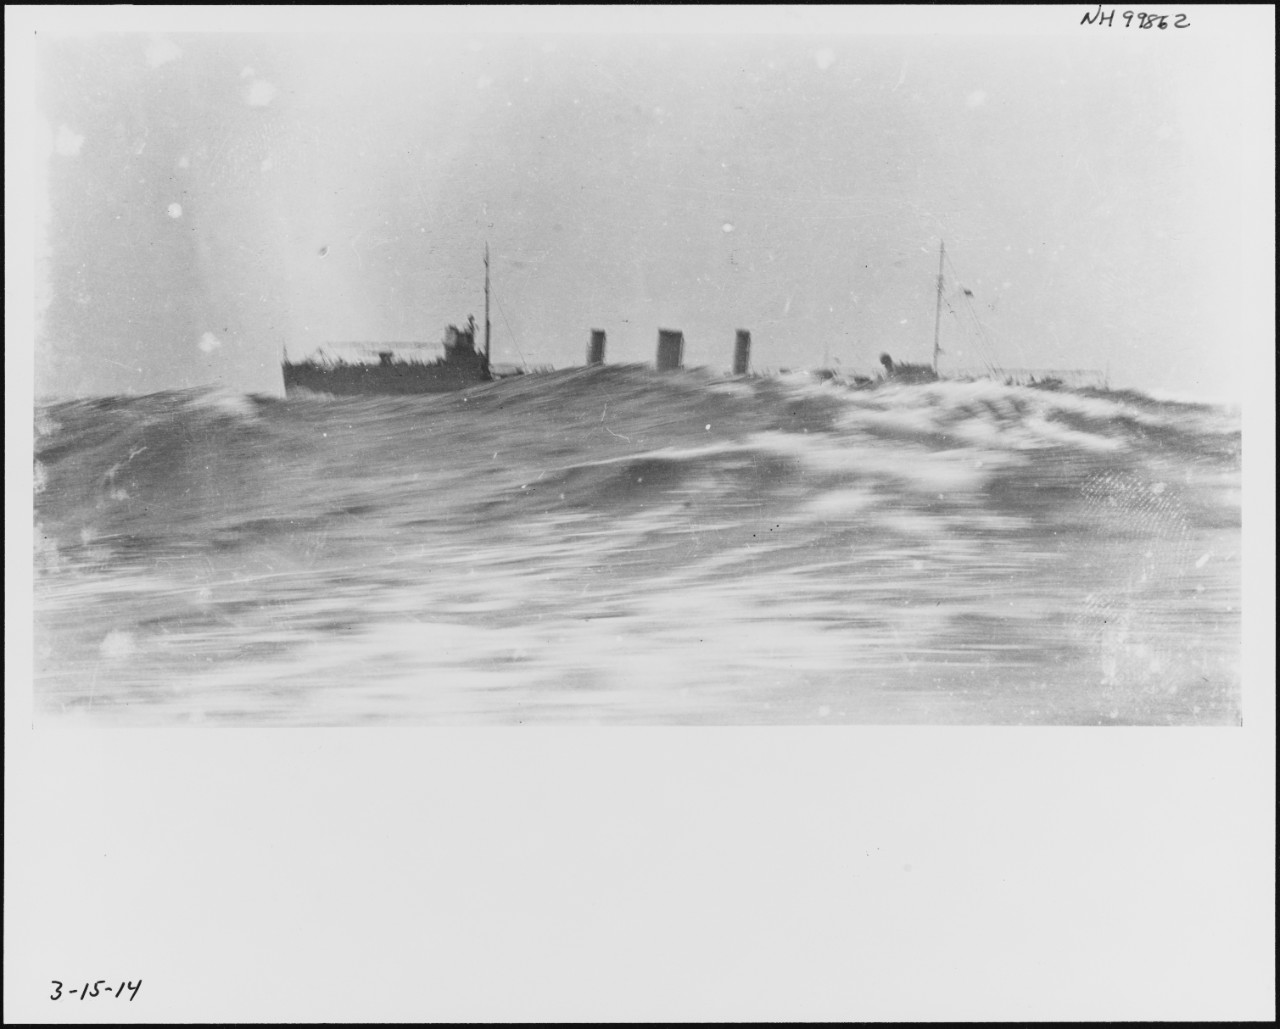 Photo #: NH 99862  Destroyer underway at sea, 15 March 1914